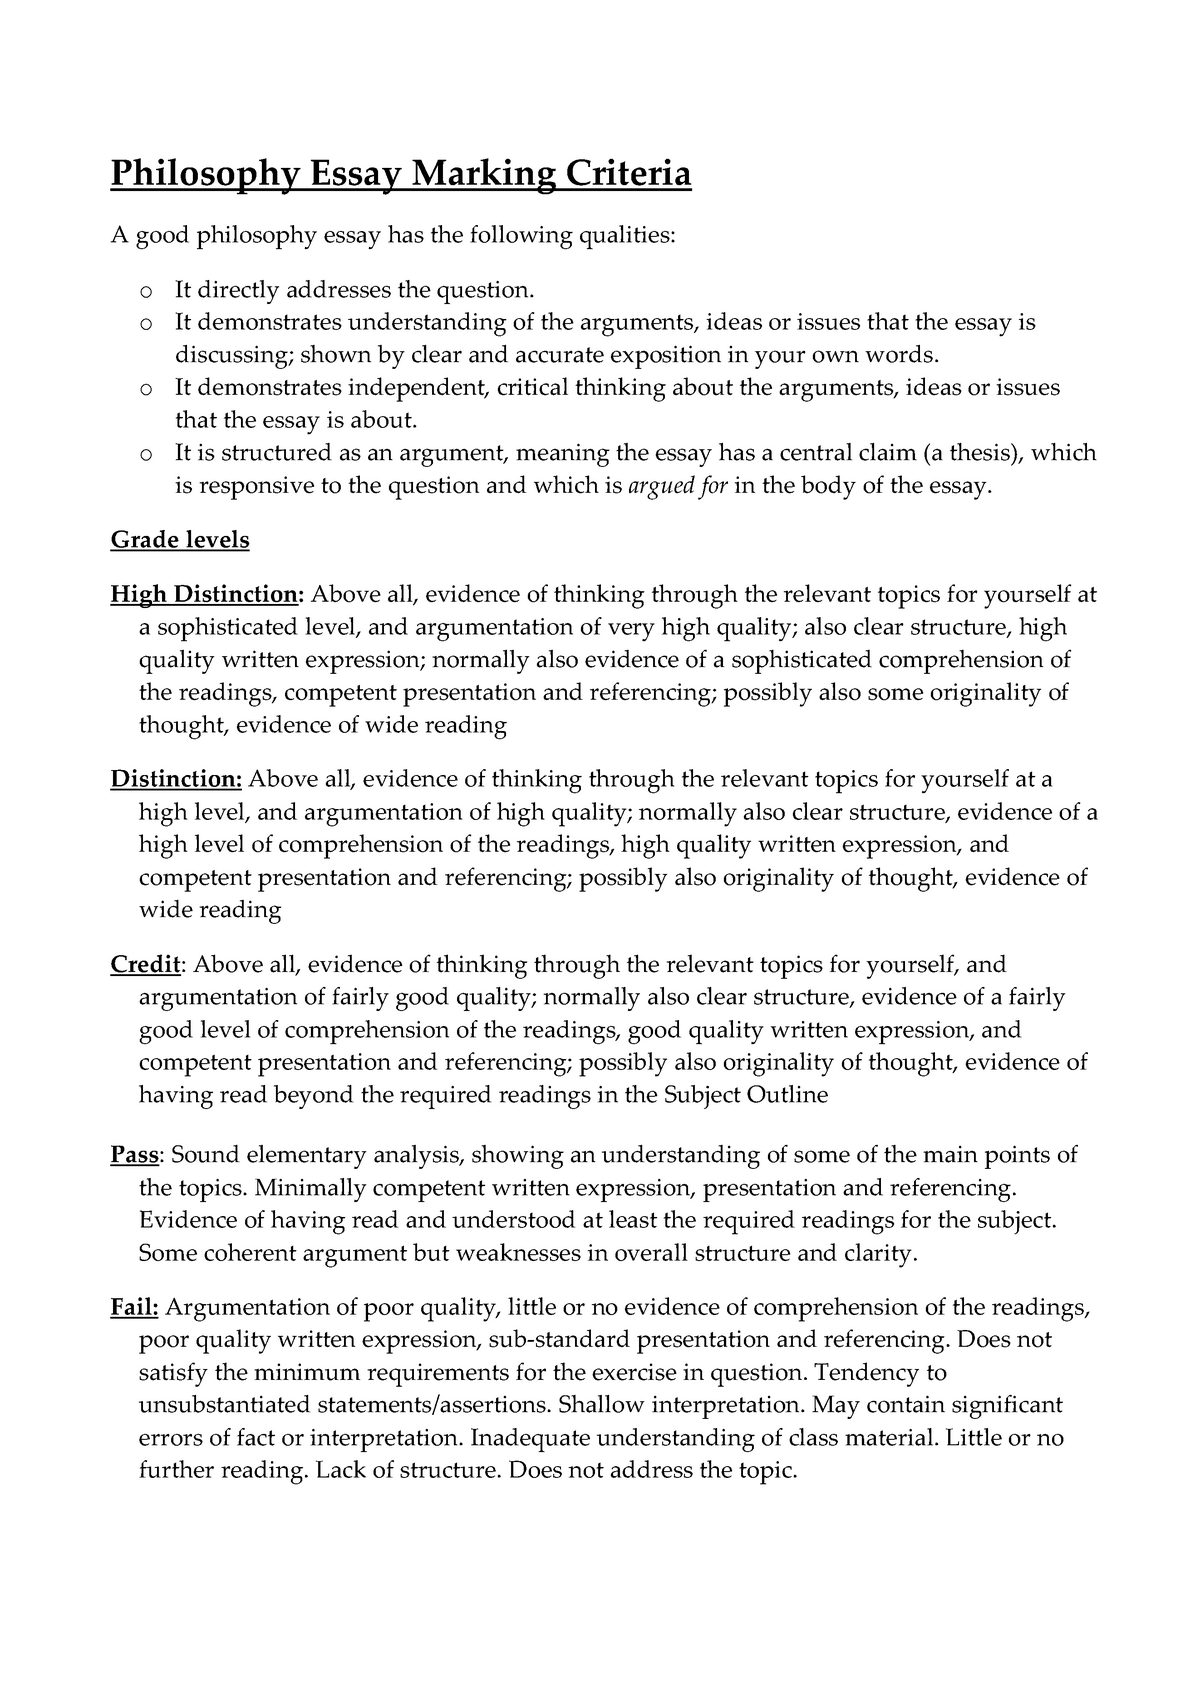 philosophy extended essay criteria